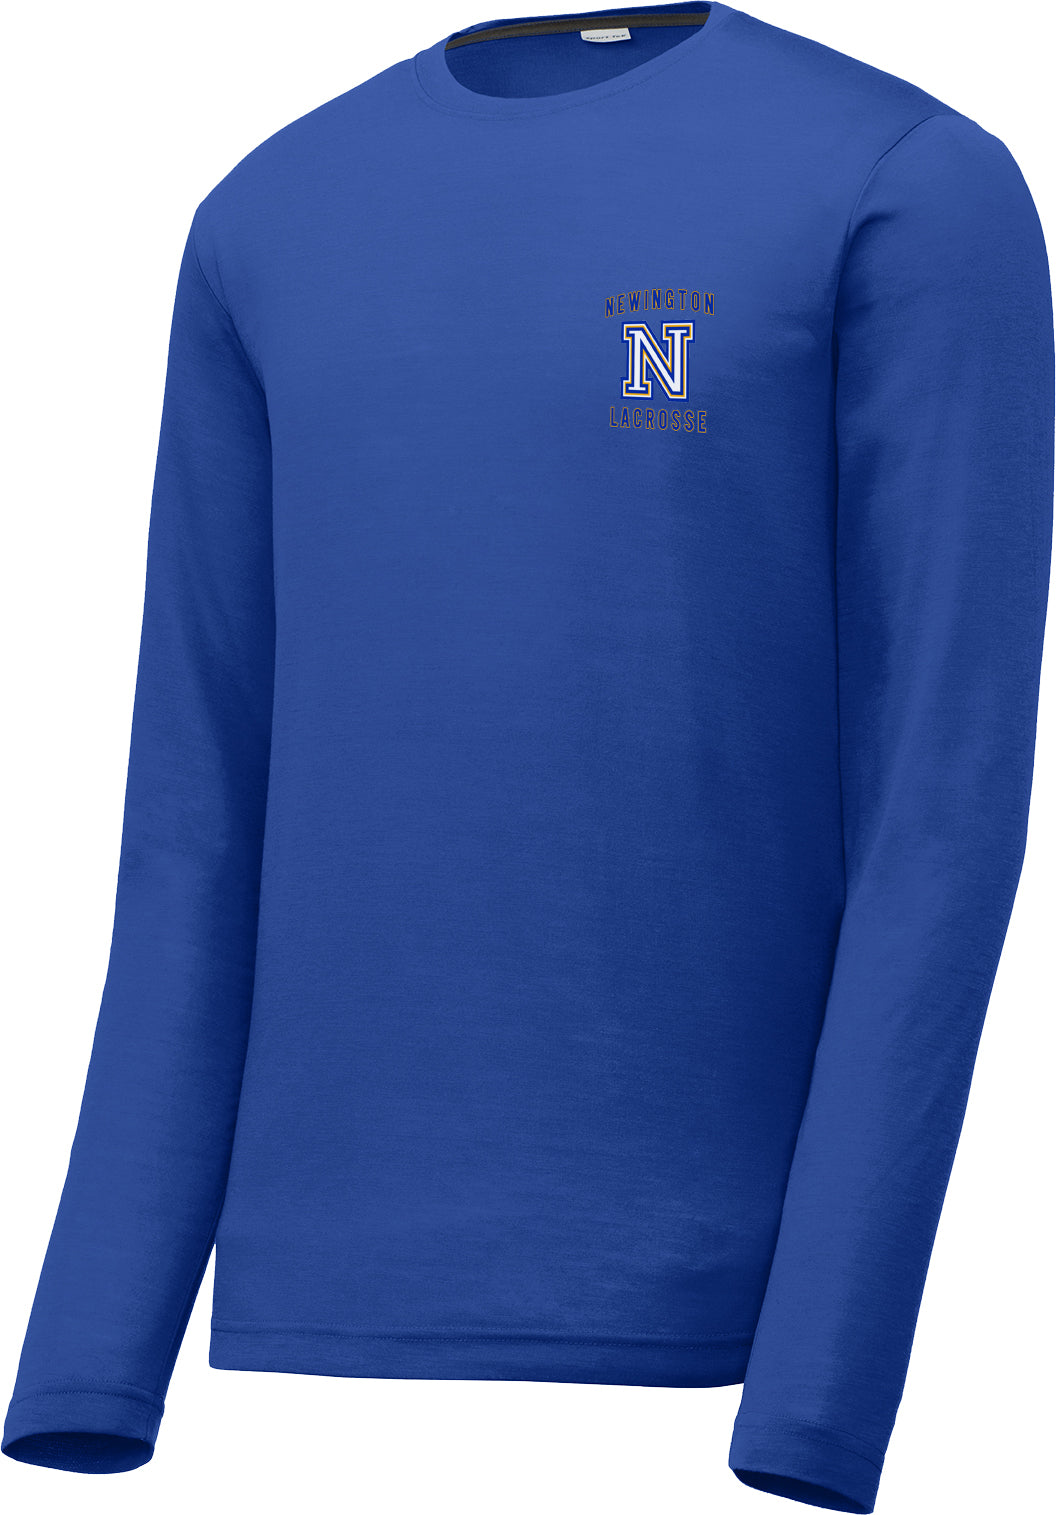 Newington Lacrosse Royal Long Sleeve CottonTouch Performance Shirt